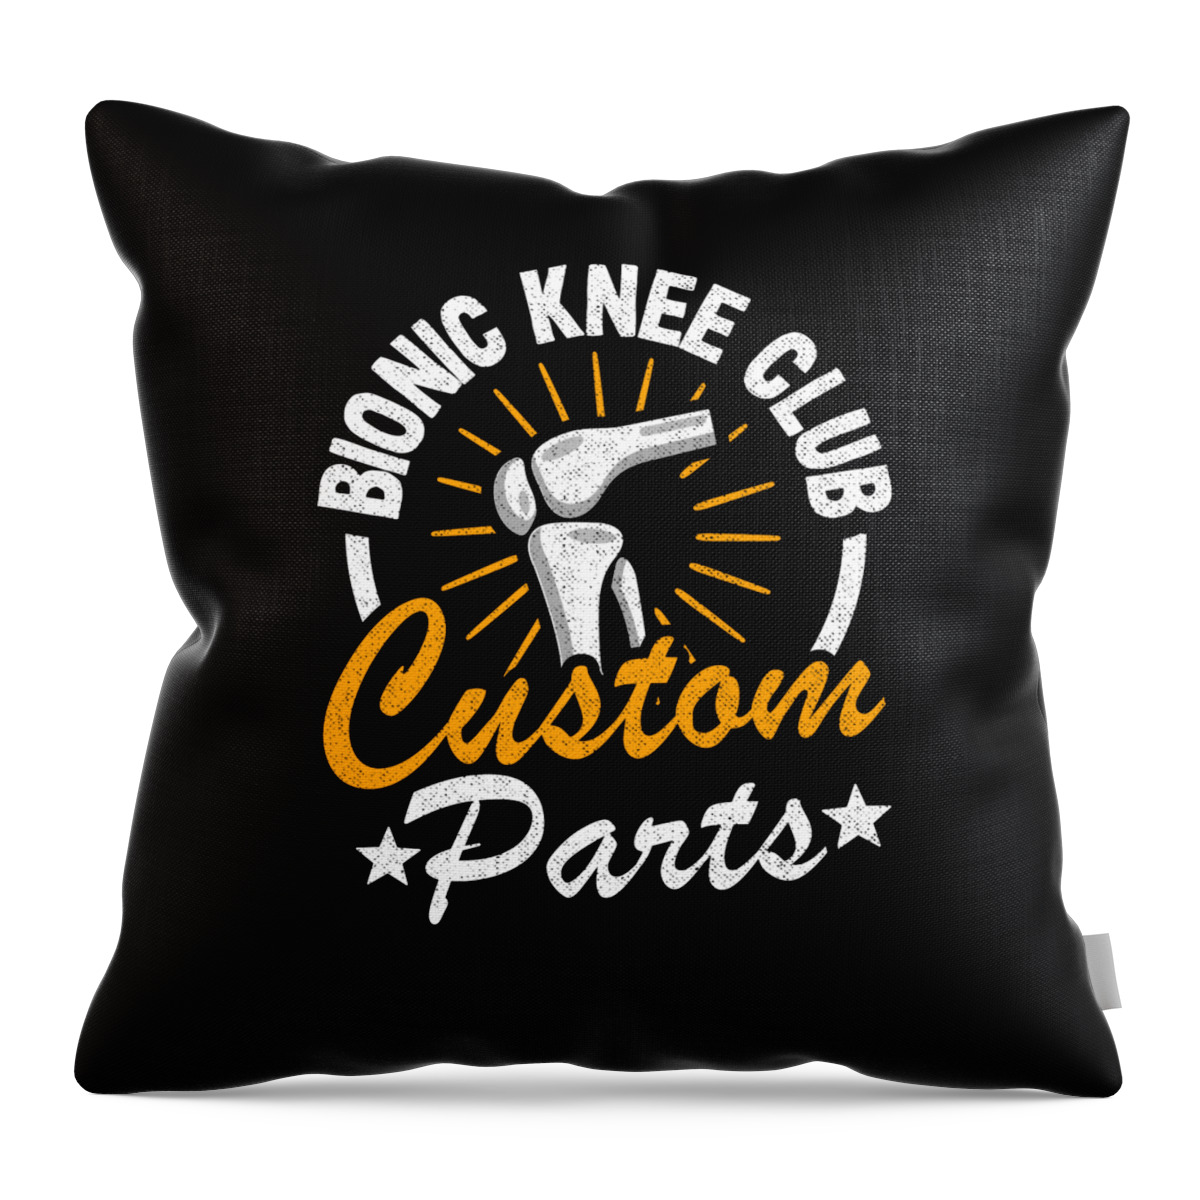 Bionic Knee Club Knee Replacement Surgery 70s Logo Throw Pillow